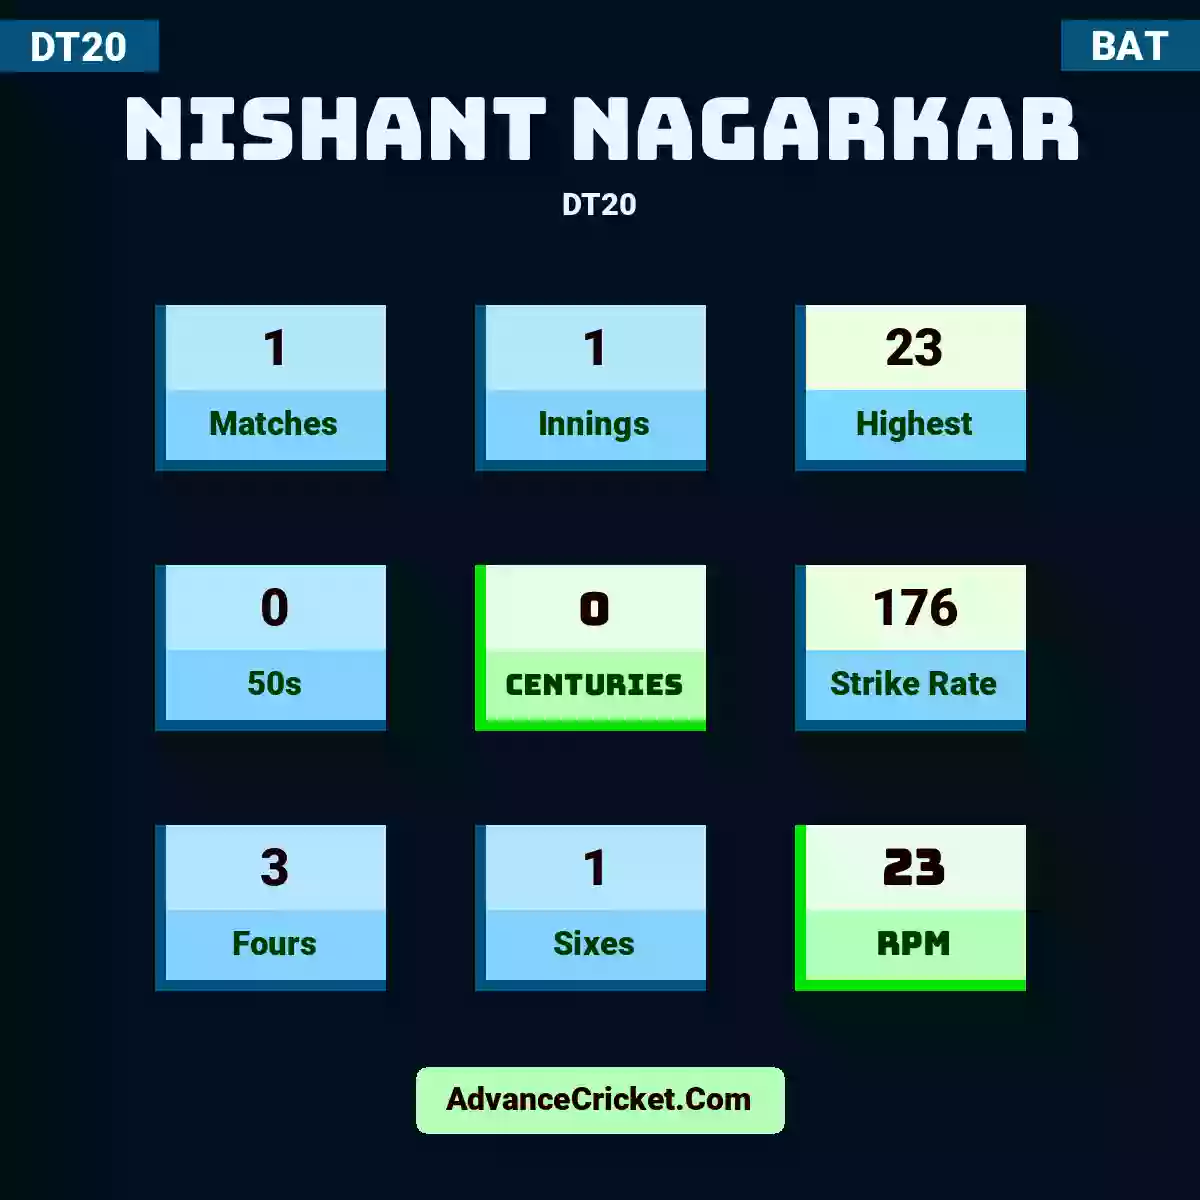 Nishant Nagarkar DT20 , Nishant Nagarkar played 1 matches, scored 23 runs as highest, 0 half-centuries, and 0 centuries, with a strike rate of 176. N.Nagarkar hit 3 fours and 1 sixes, with an RPM of 23.